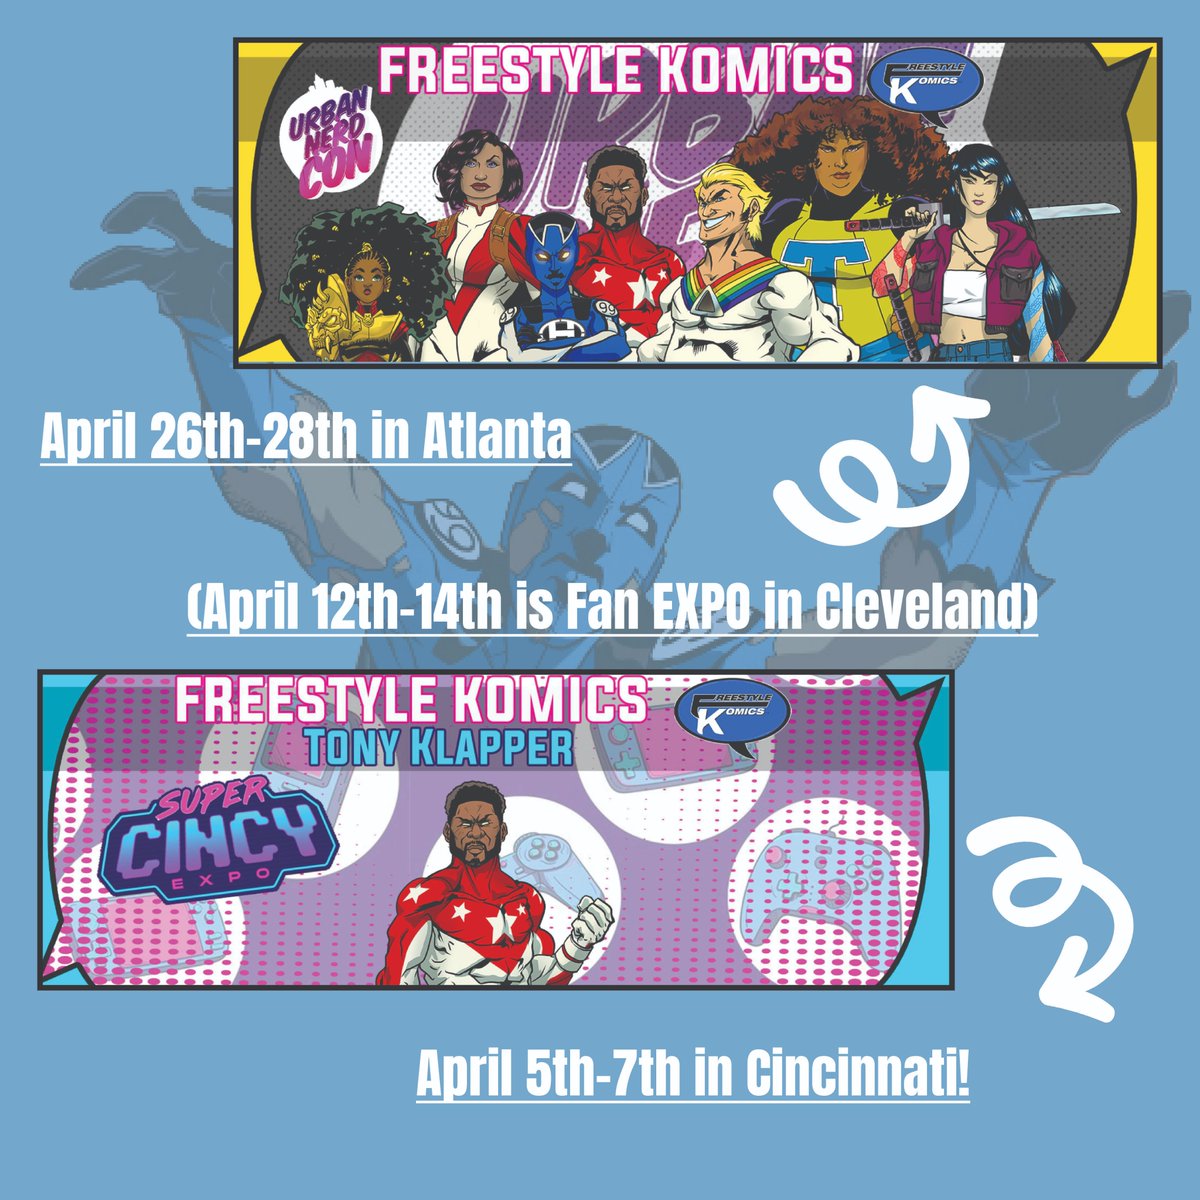 Check out these upcoming events in April! Tony Klapper in Cincinnati 5th-7th FSK in Cleveland 12th-14th FSK in Atlanta 26th-28th #comic #igcomics #comicon #comiccollector #comicsforsale #comicbookartist #comico #comicbooknerd #comicnerd #fyp #cons #comiccons